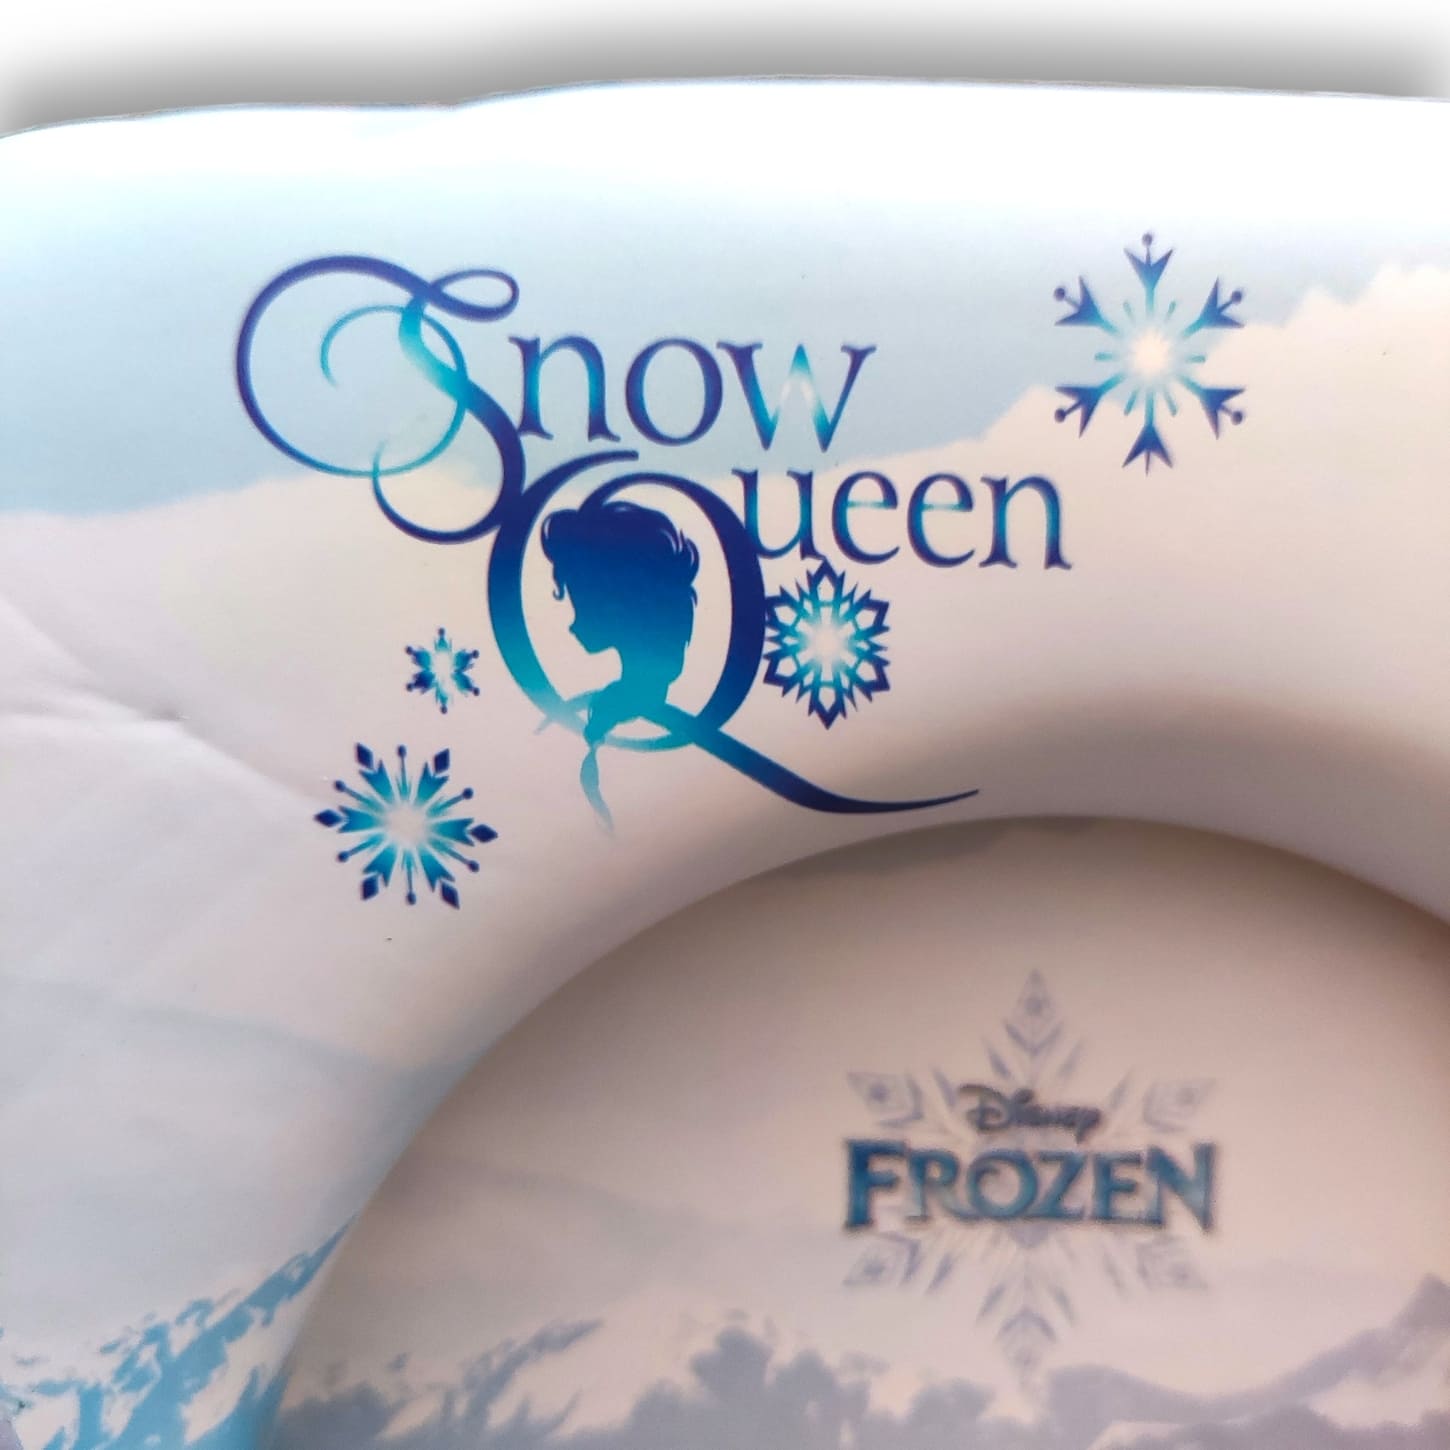 Asiento inodoro para niños acolchado - Elsa & Ana Frozen